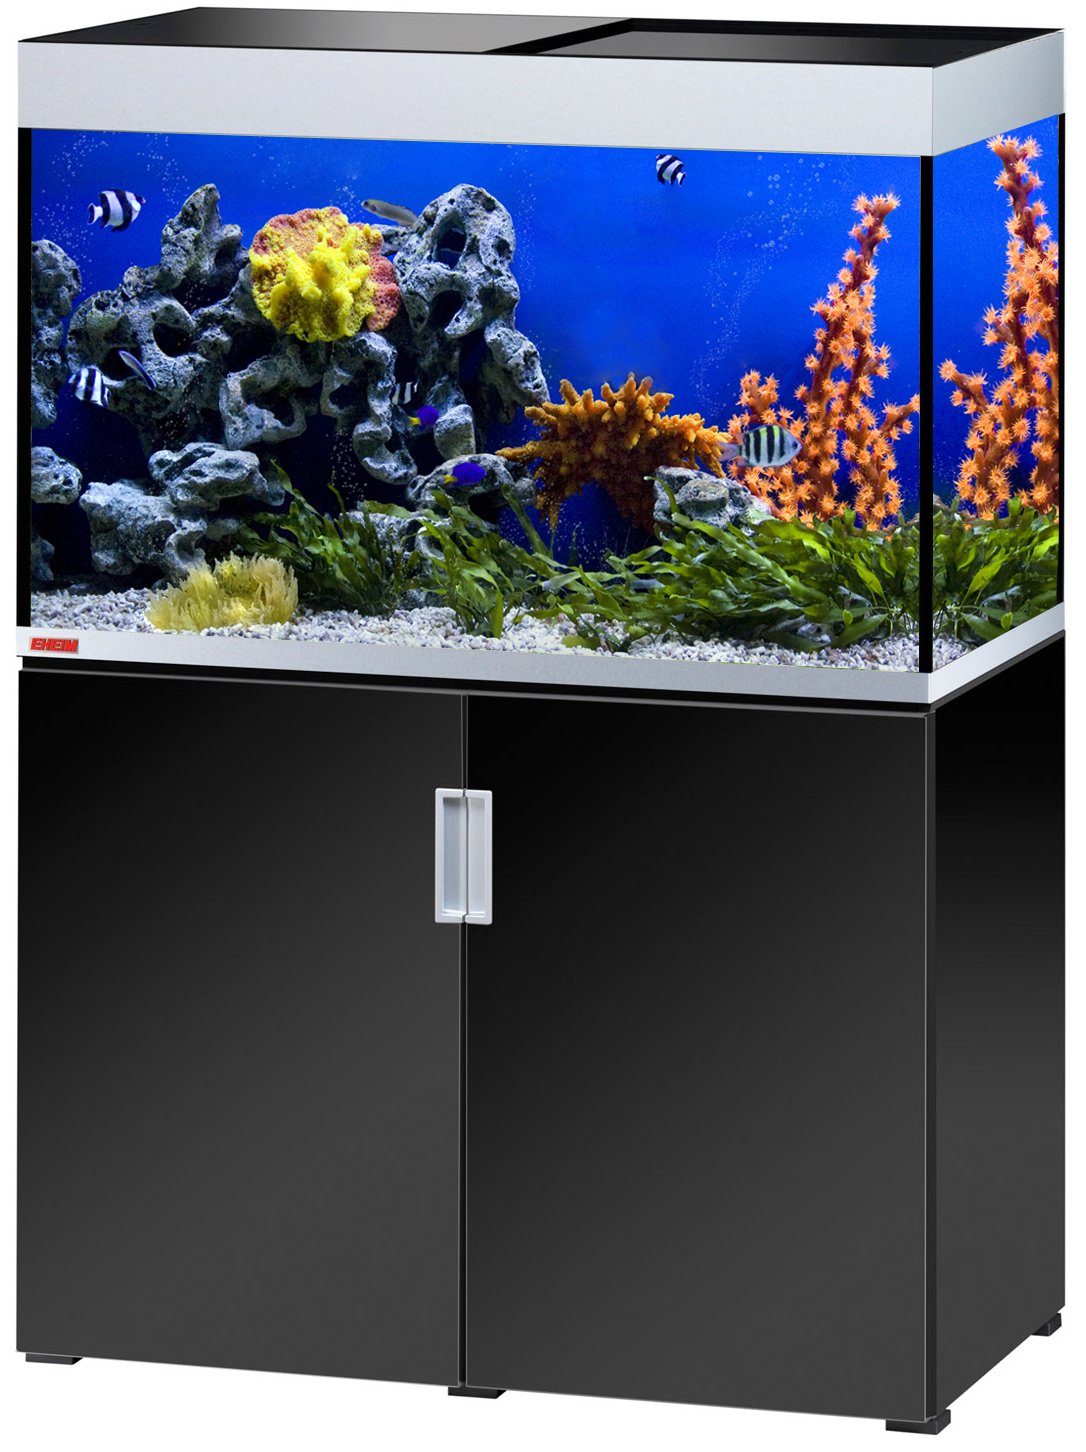 eheim-incpiria-marine-300-led-noir-brillant-argent-kit-aquarium-100-cm-300-l-avec-meuble-et-eclairage-leds